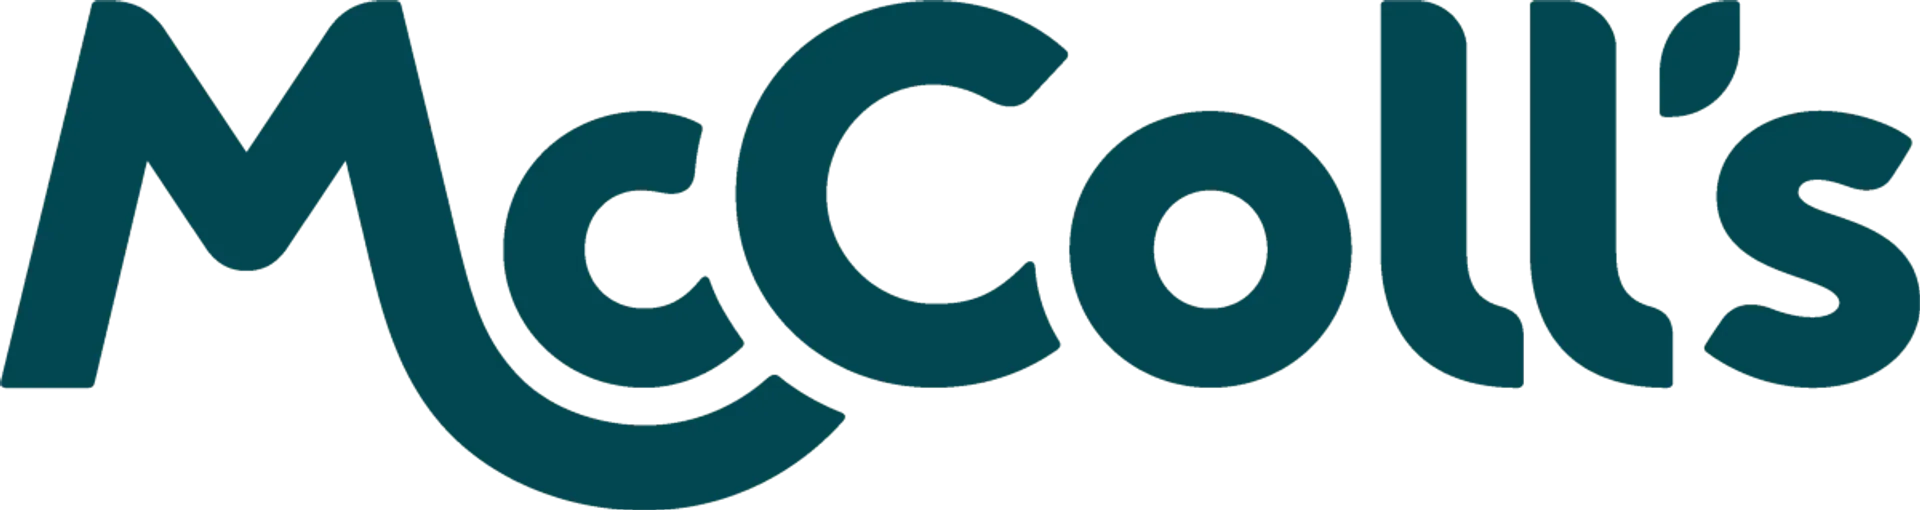 MCCOLL'S logo